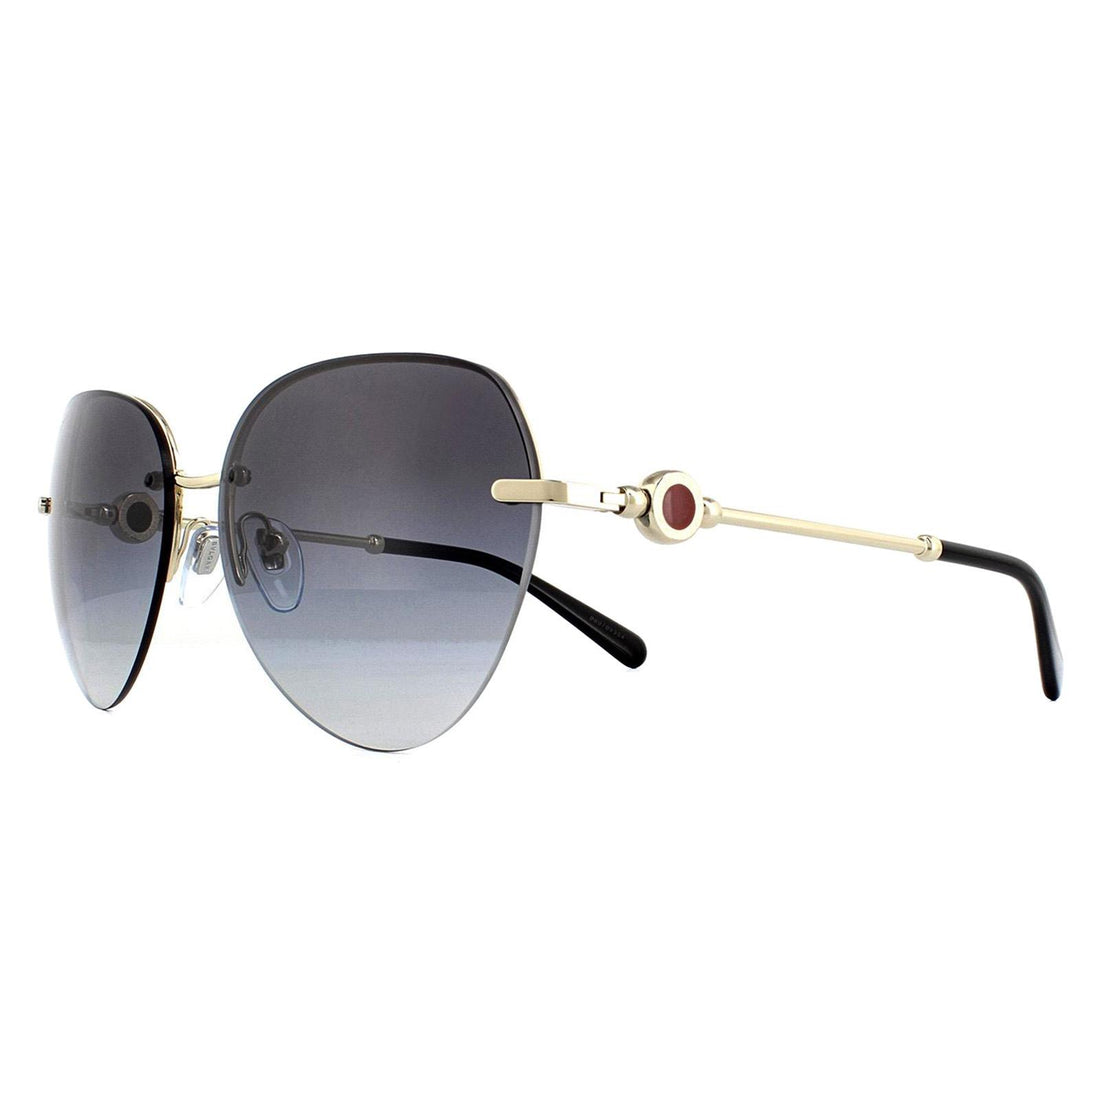 Bvlgari Sunglasses BV6108 278/8G Pale Gold Grey Gradient